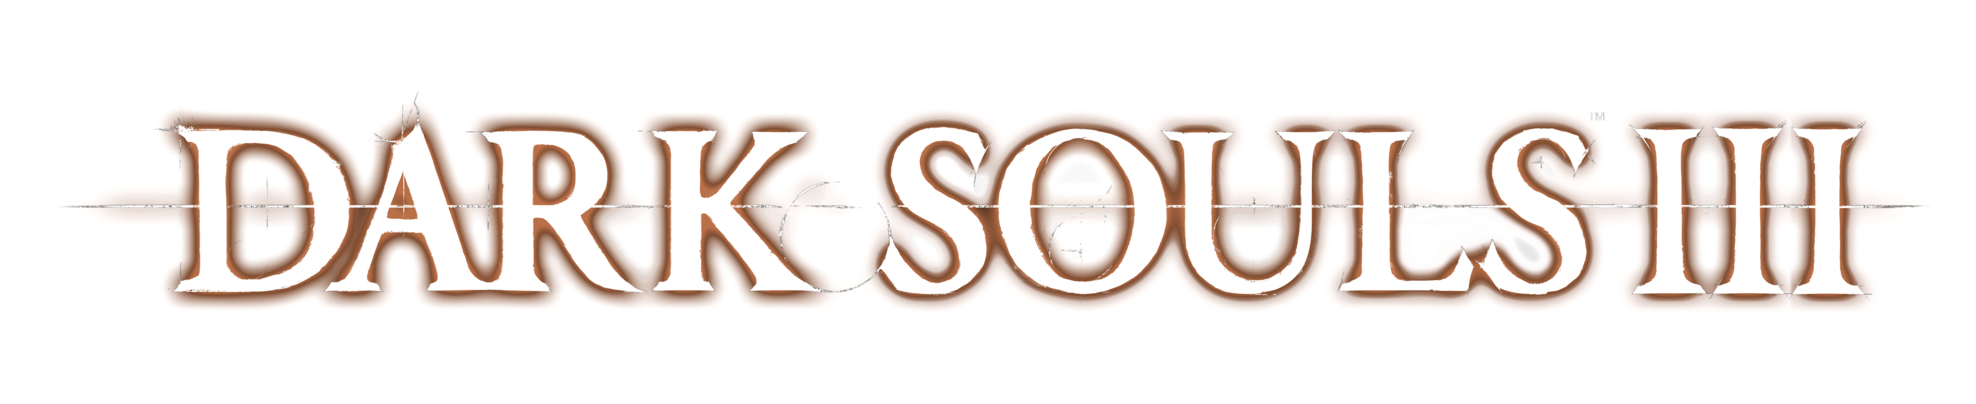 Dark Souls Logo Image PNG Image